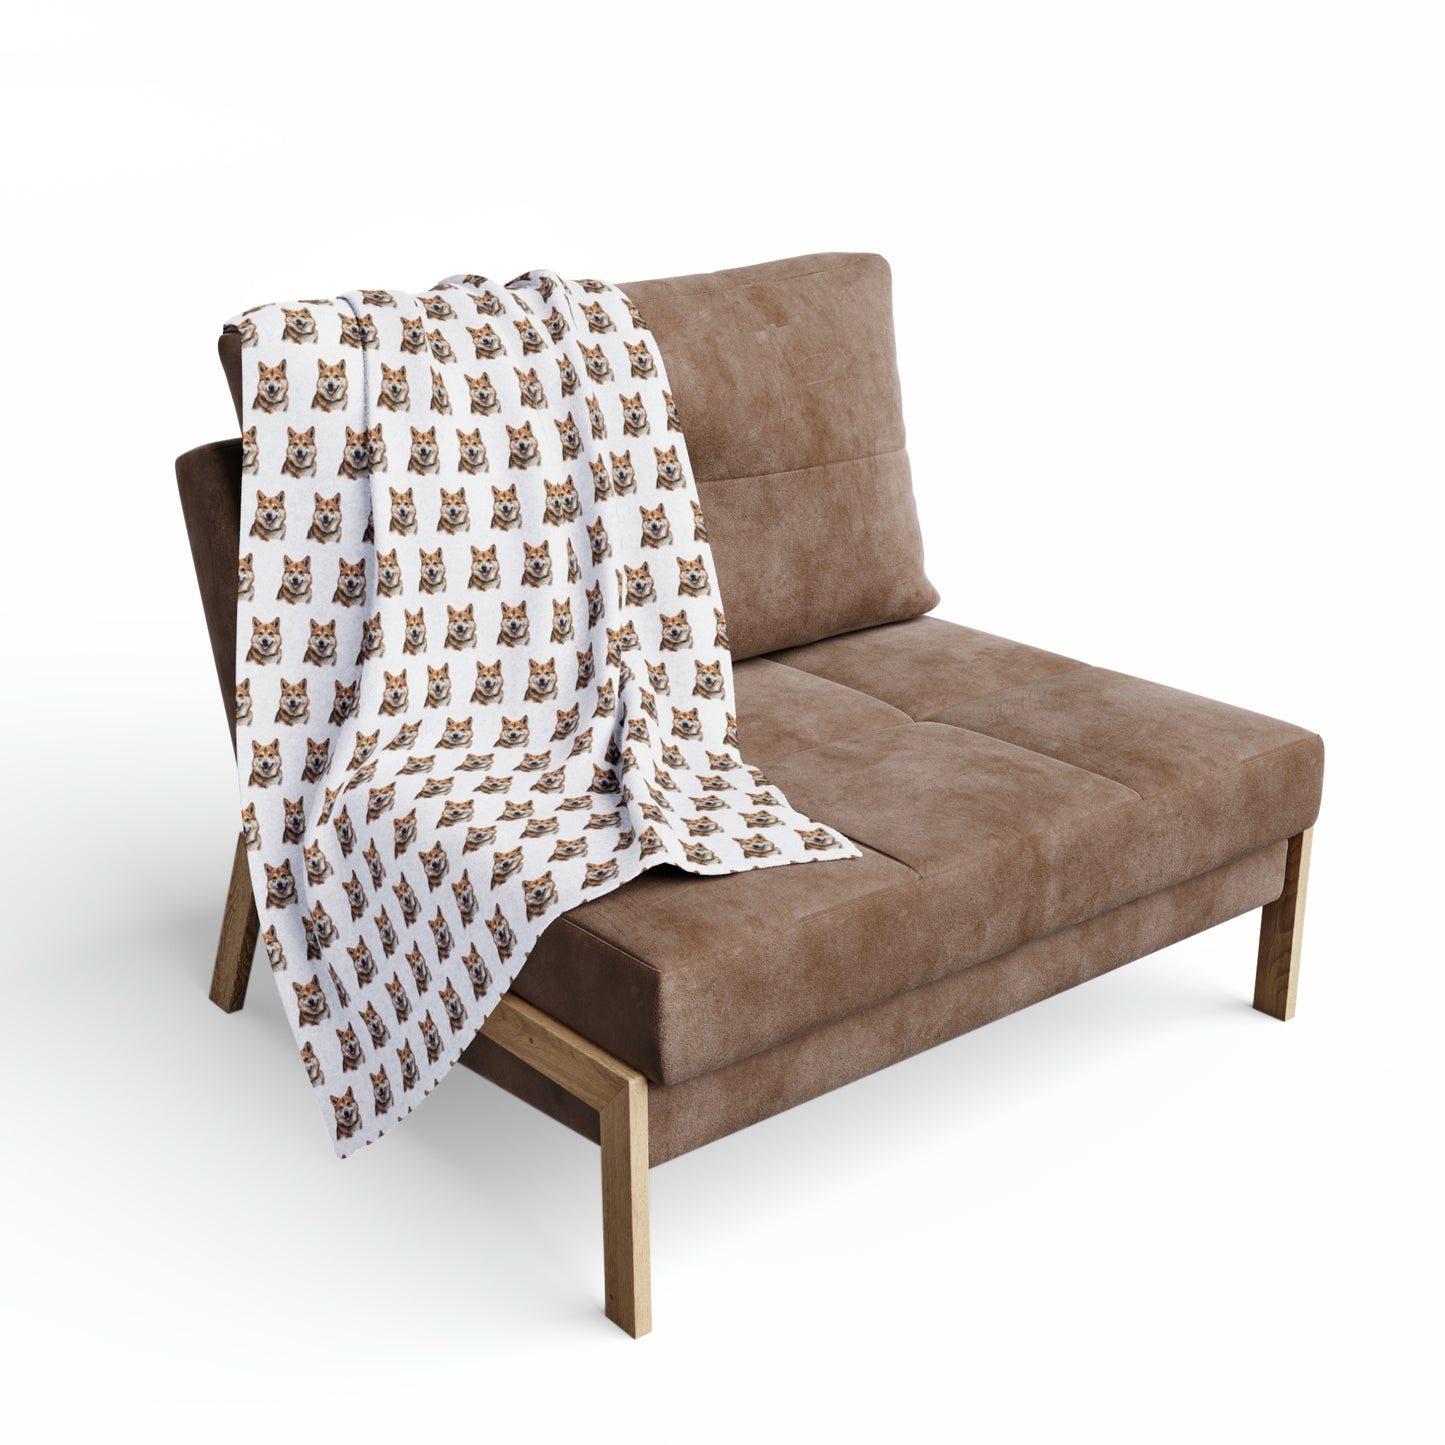 akita fleece blanket on a chair